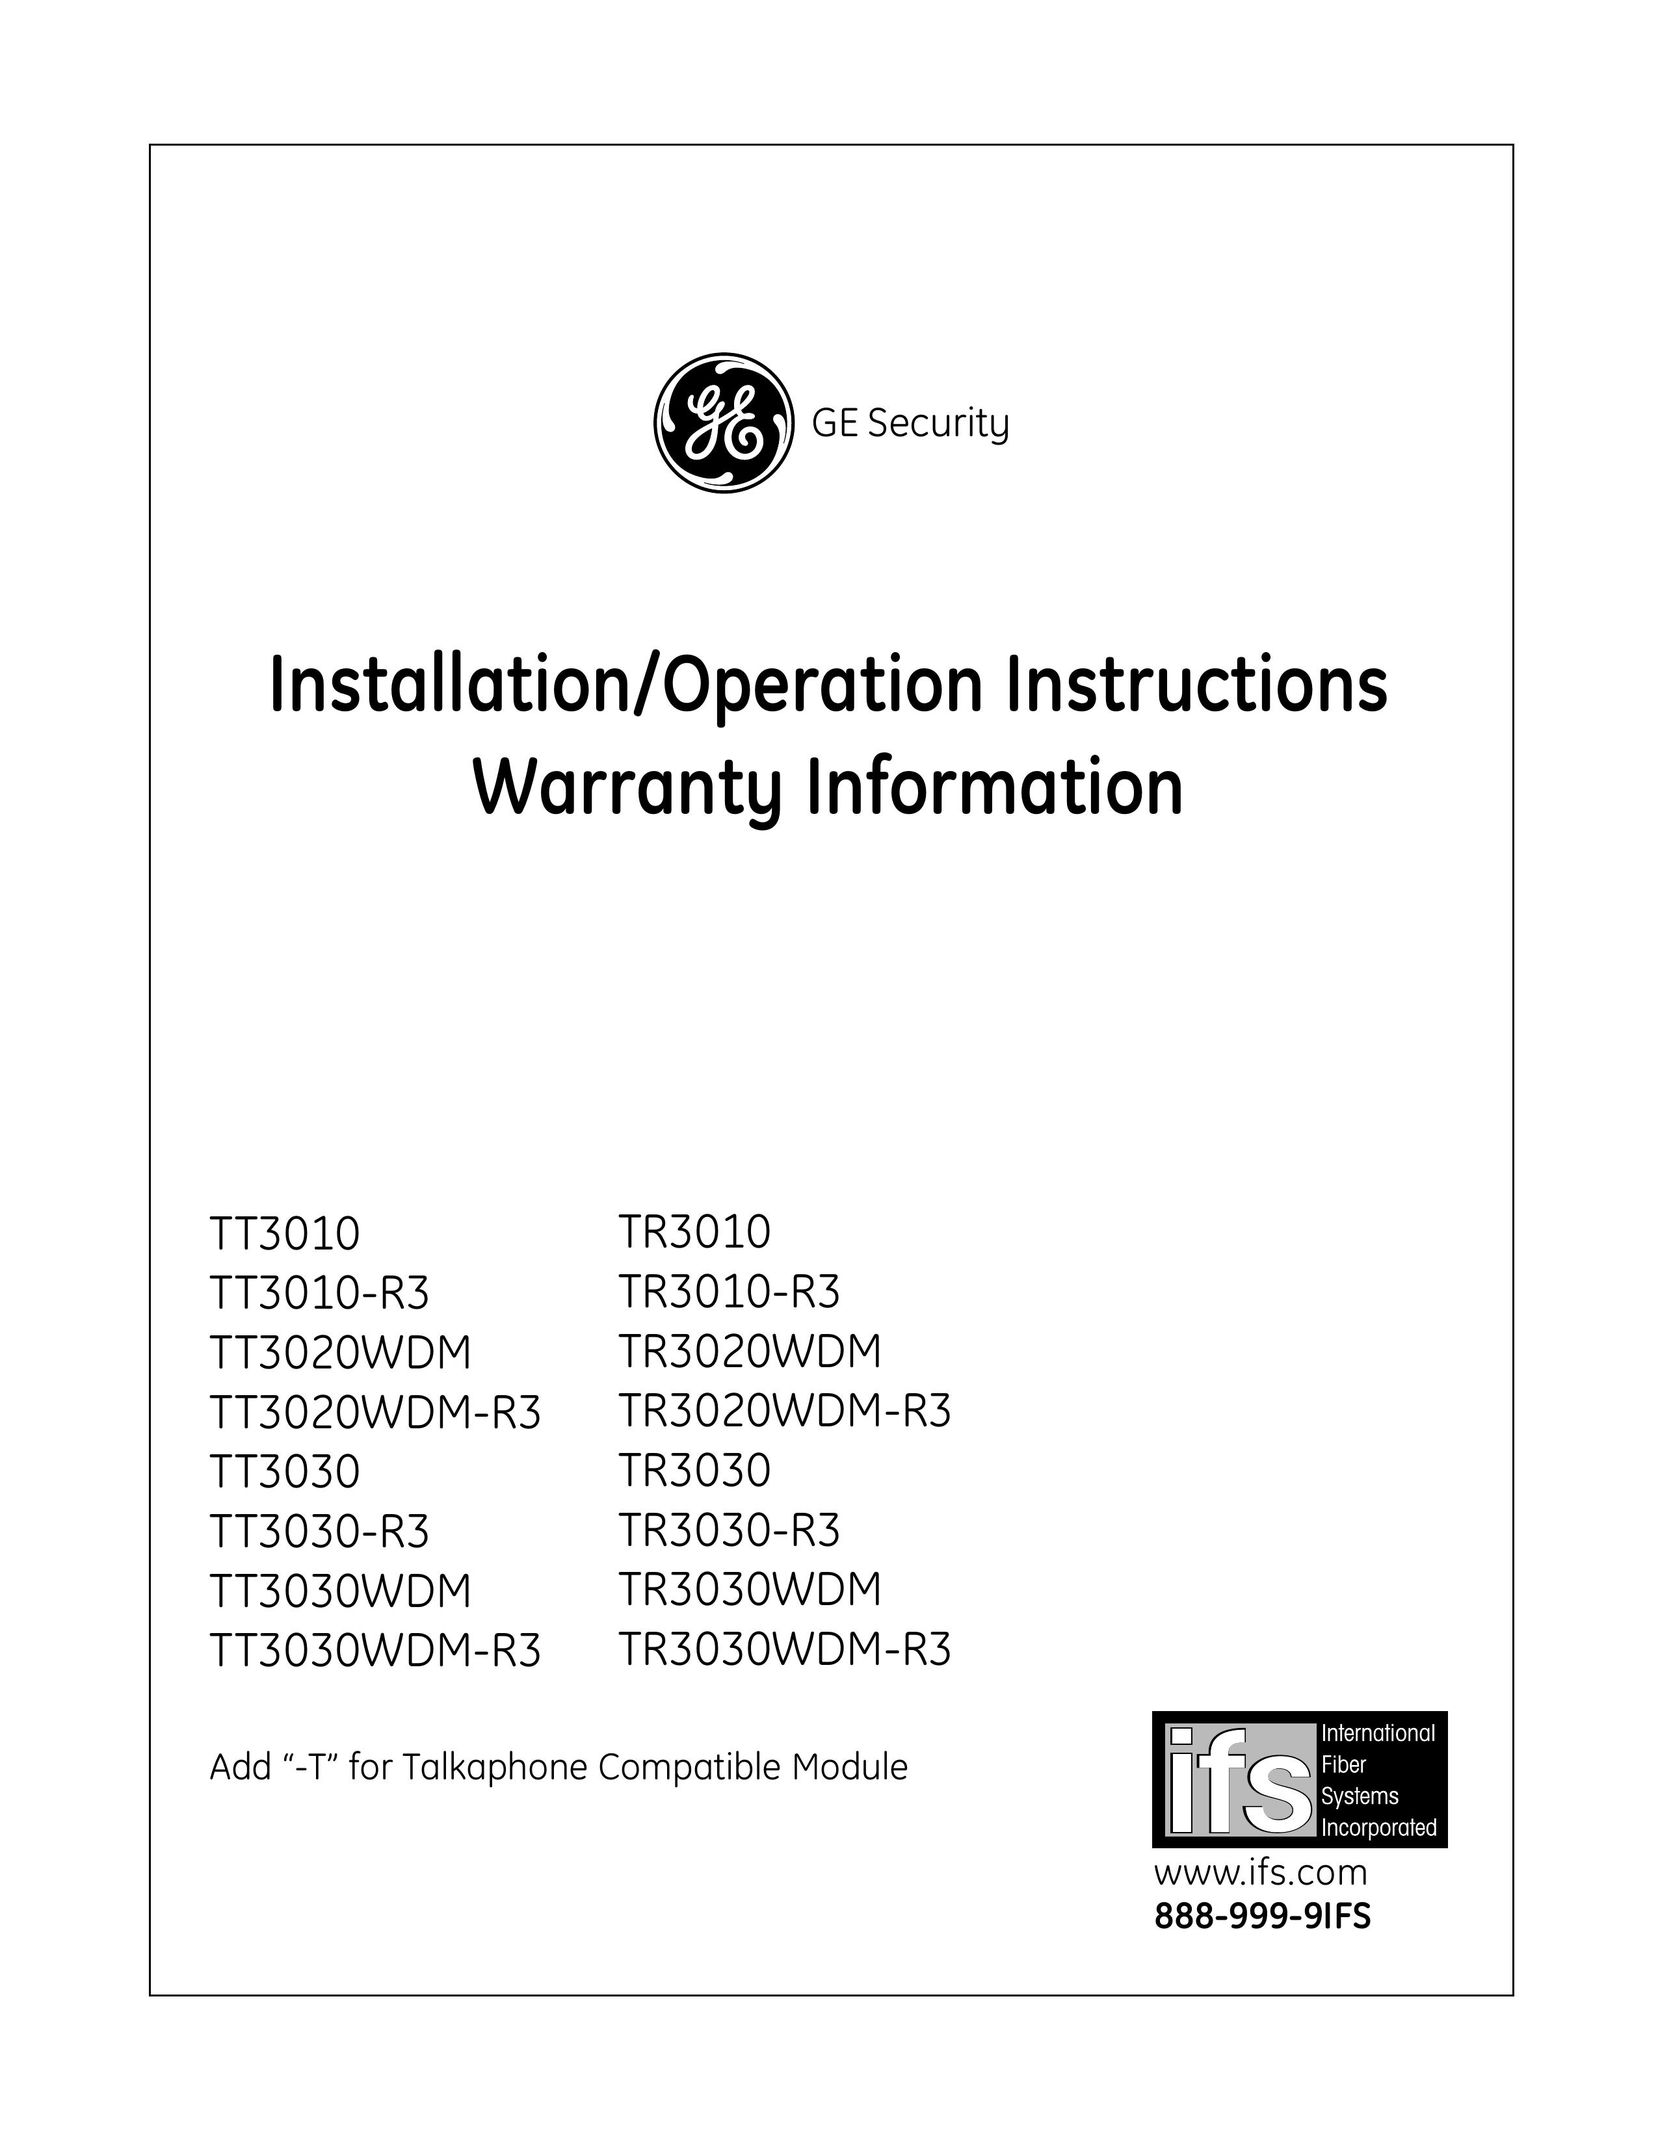 GE TR3030-R3 Telephone Accessories User Manual